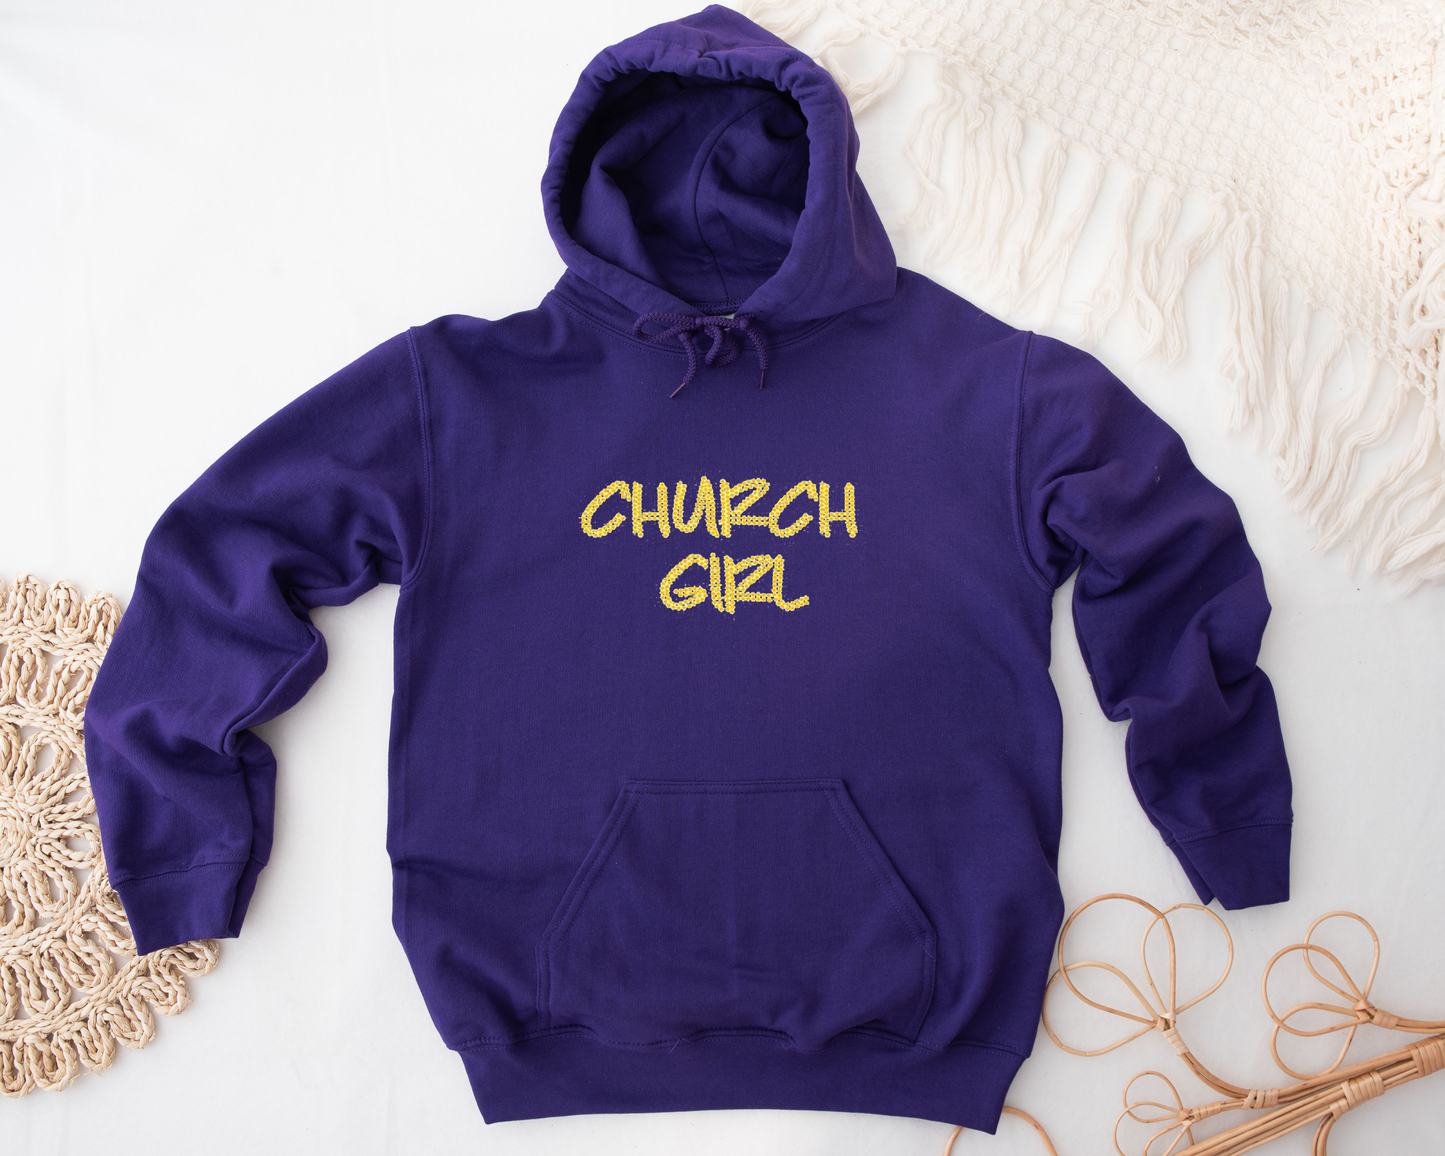 Church Girl hoodies/sweatshirts